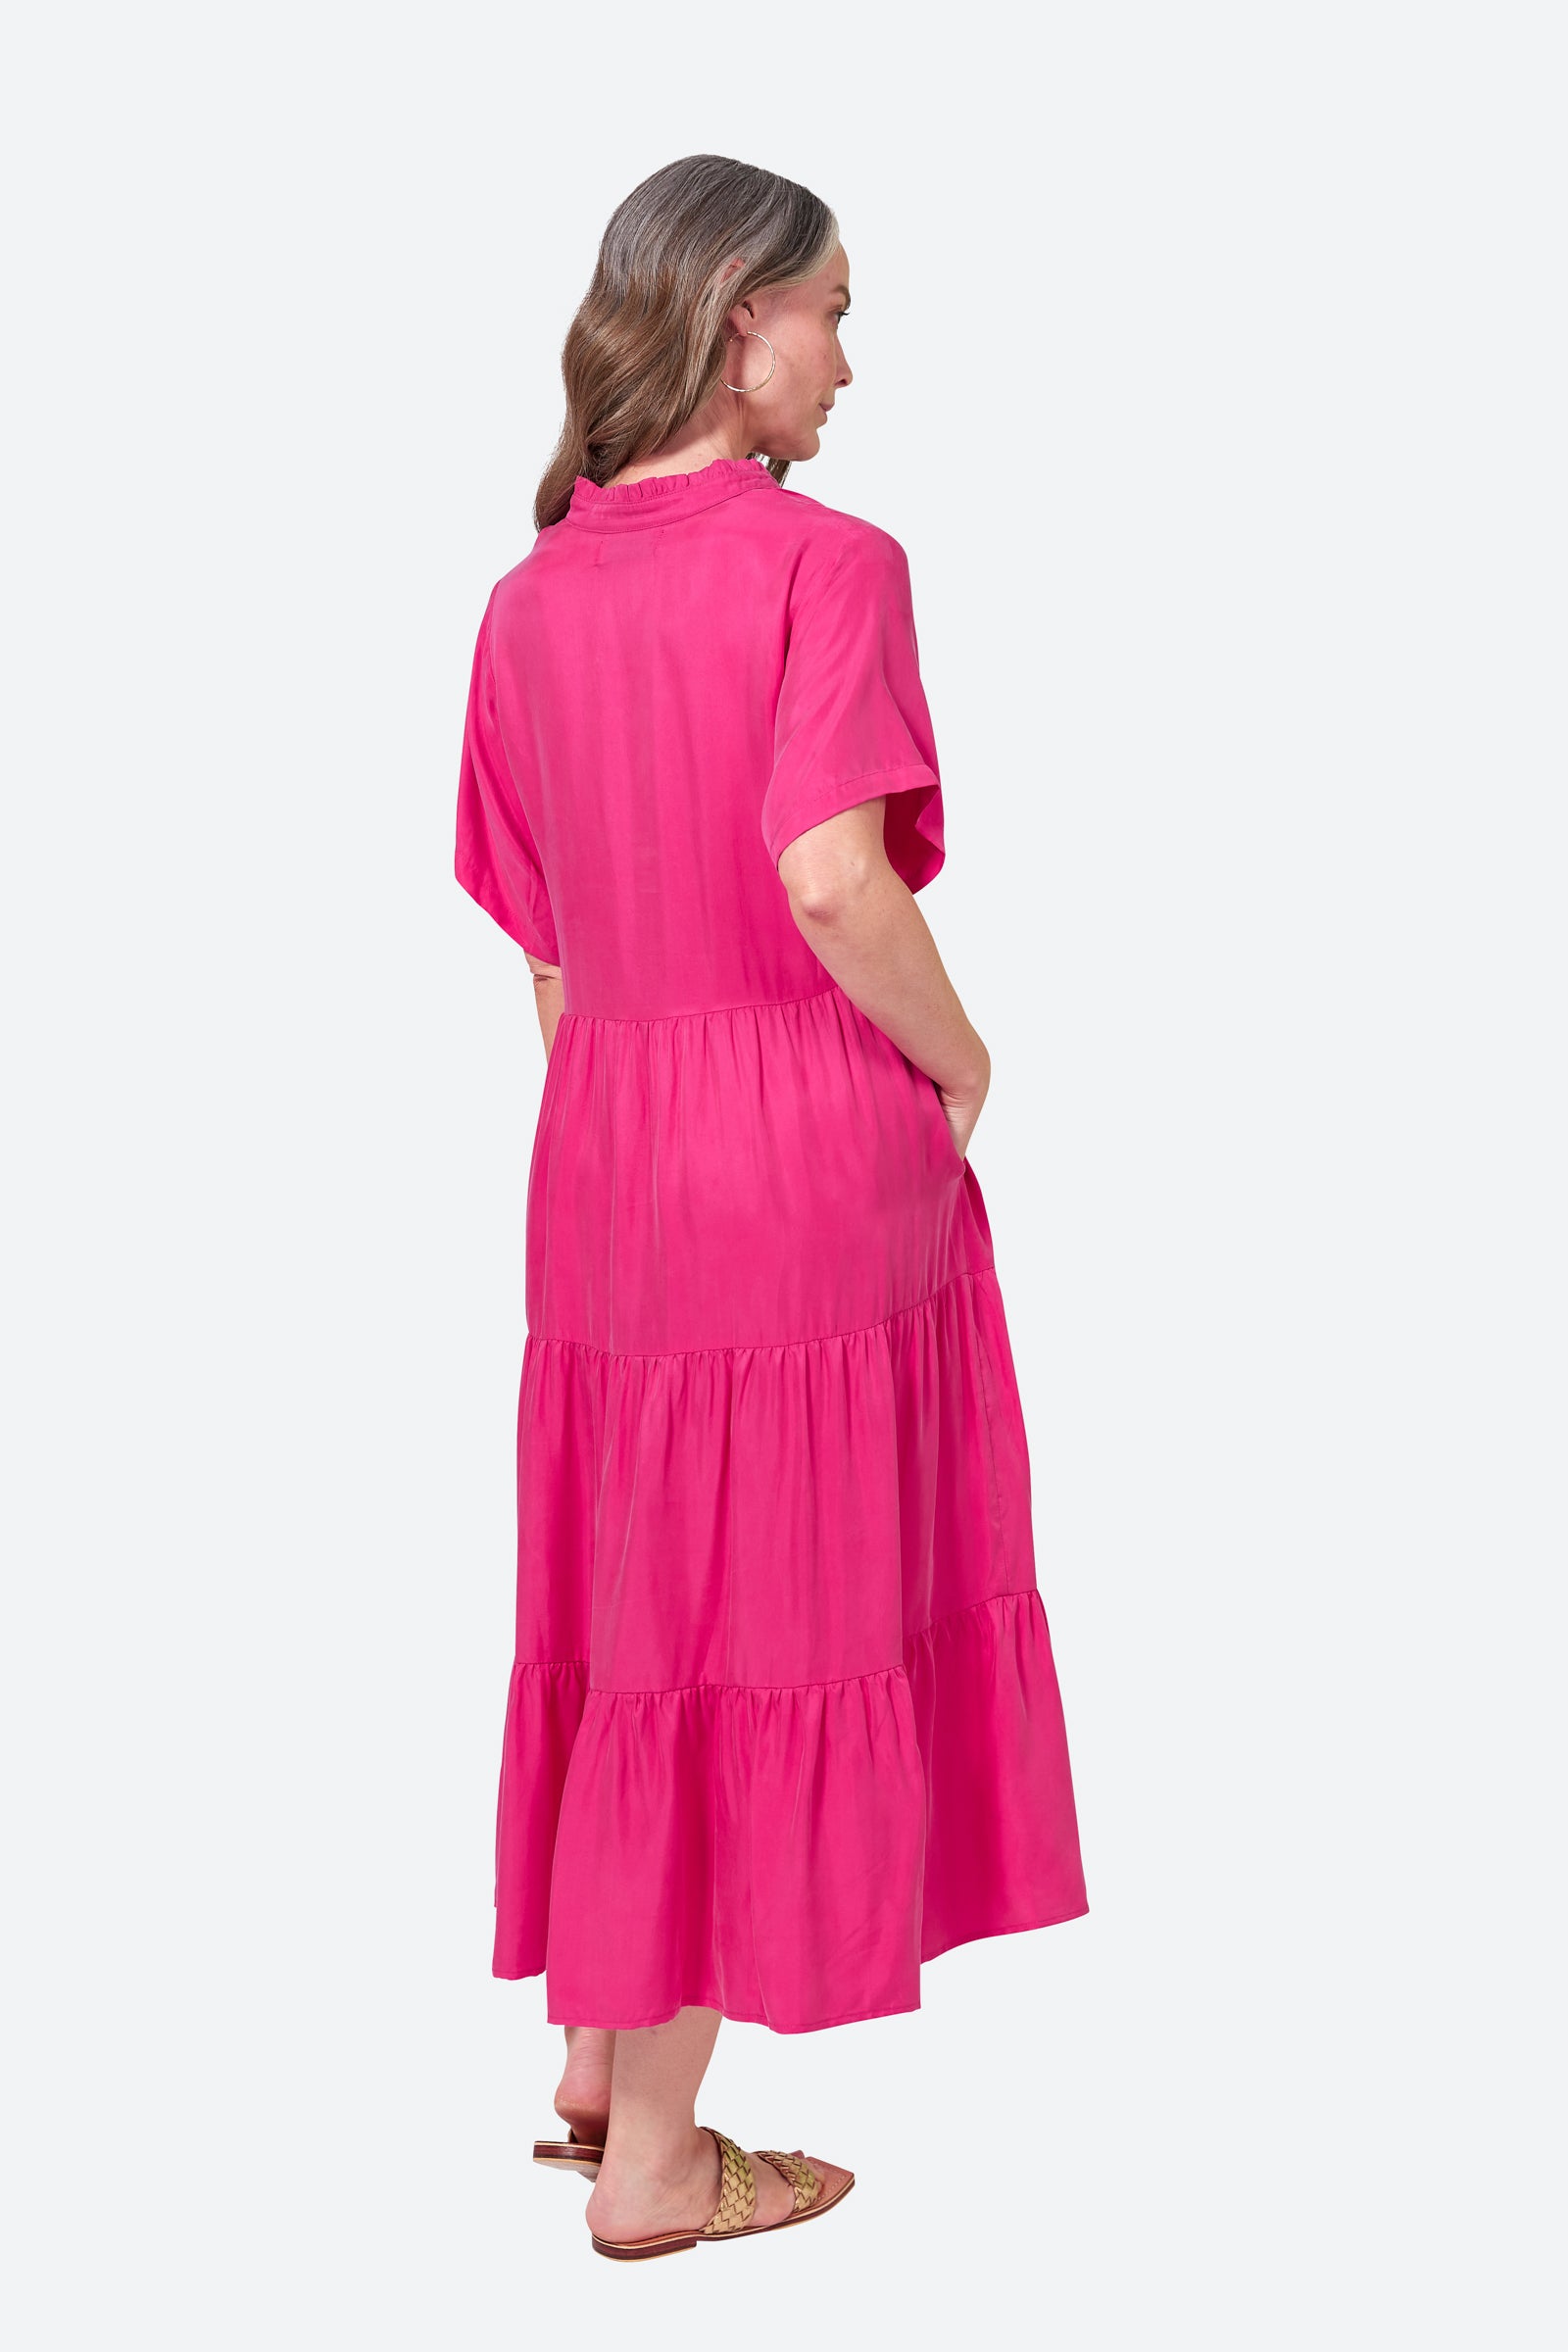 Elixir Tiered Dress - Dragonfruit - eb&ive Clothing - Dress Cupro